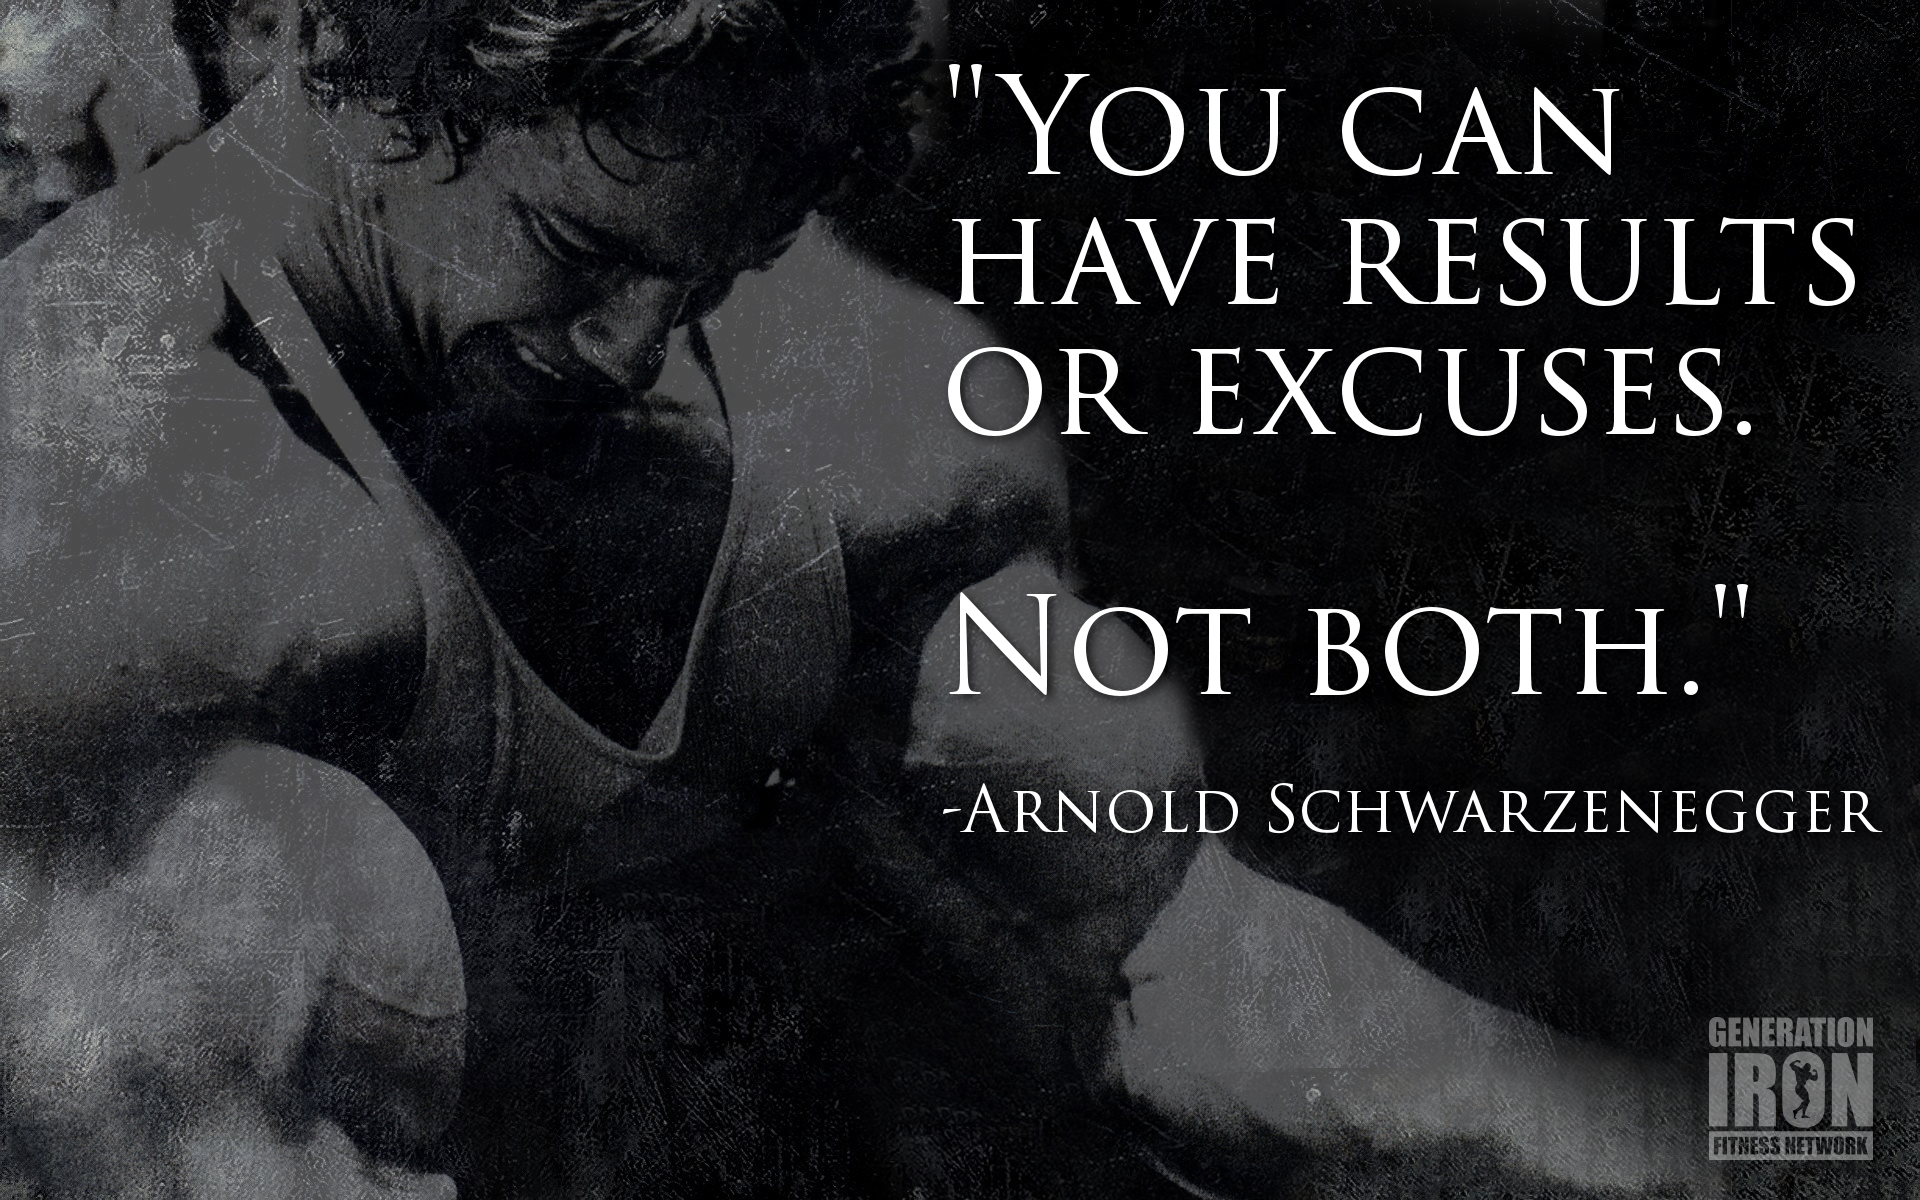 Generation Iron Arnold Schwarzenegger quote